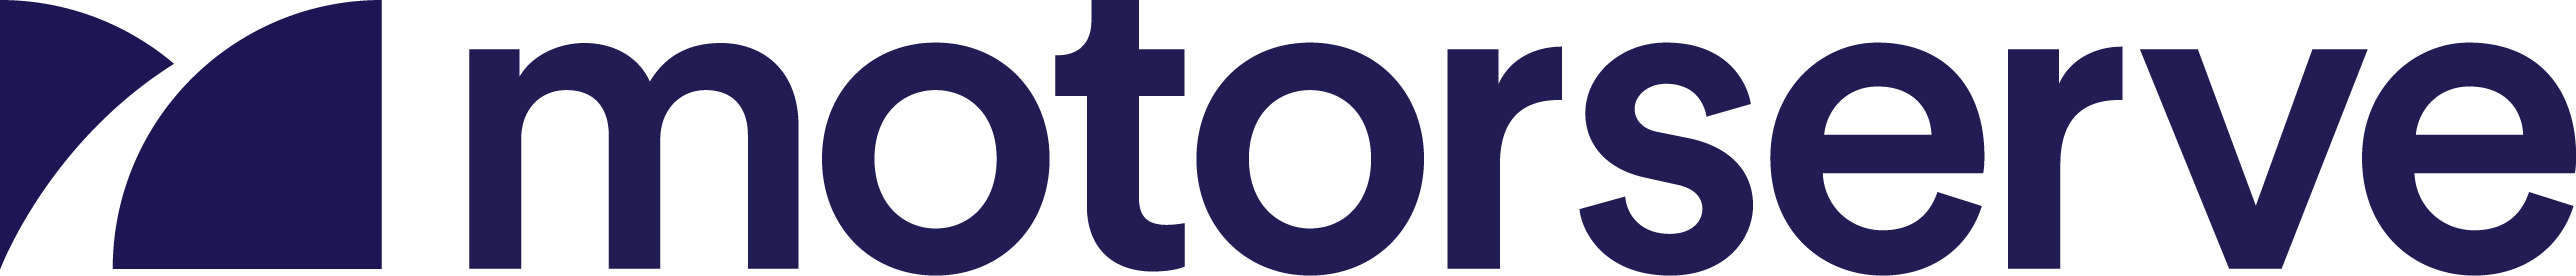 Motorserve logo